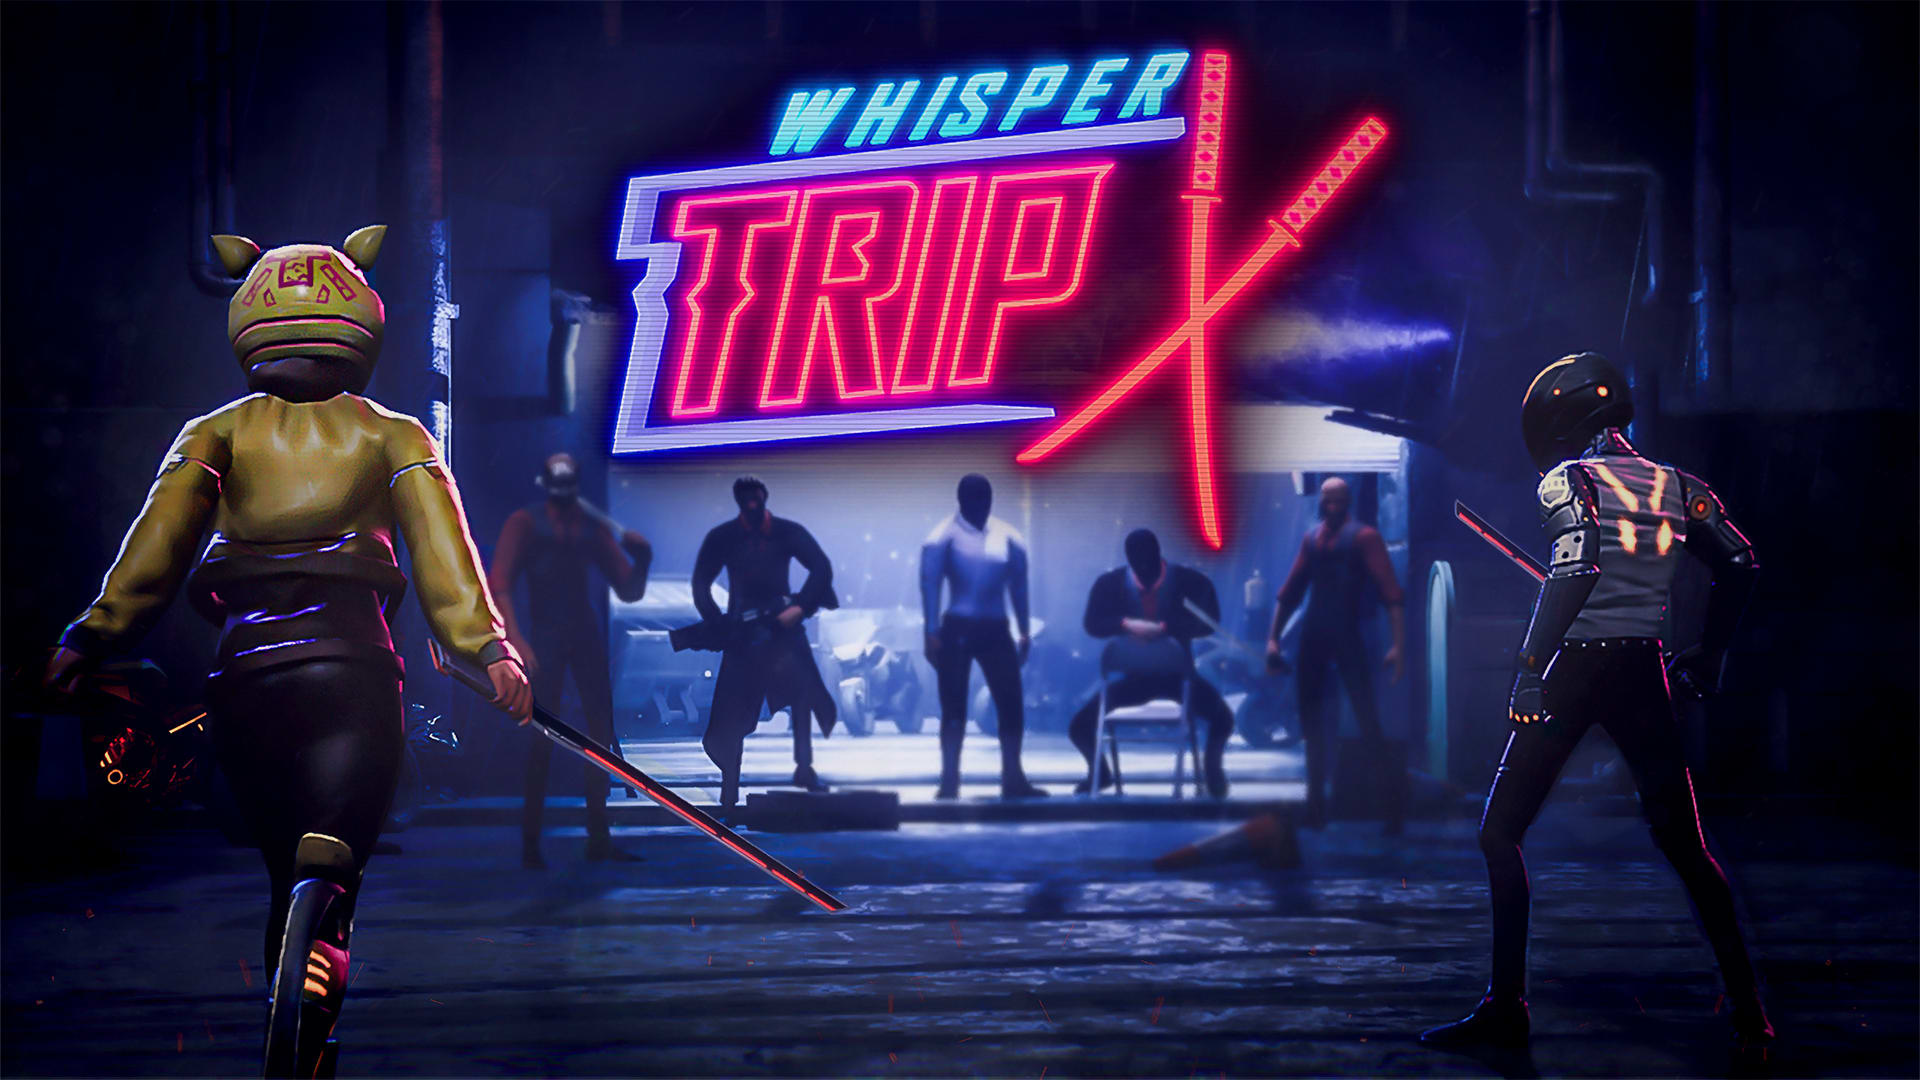 Whisper Trip 1